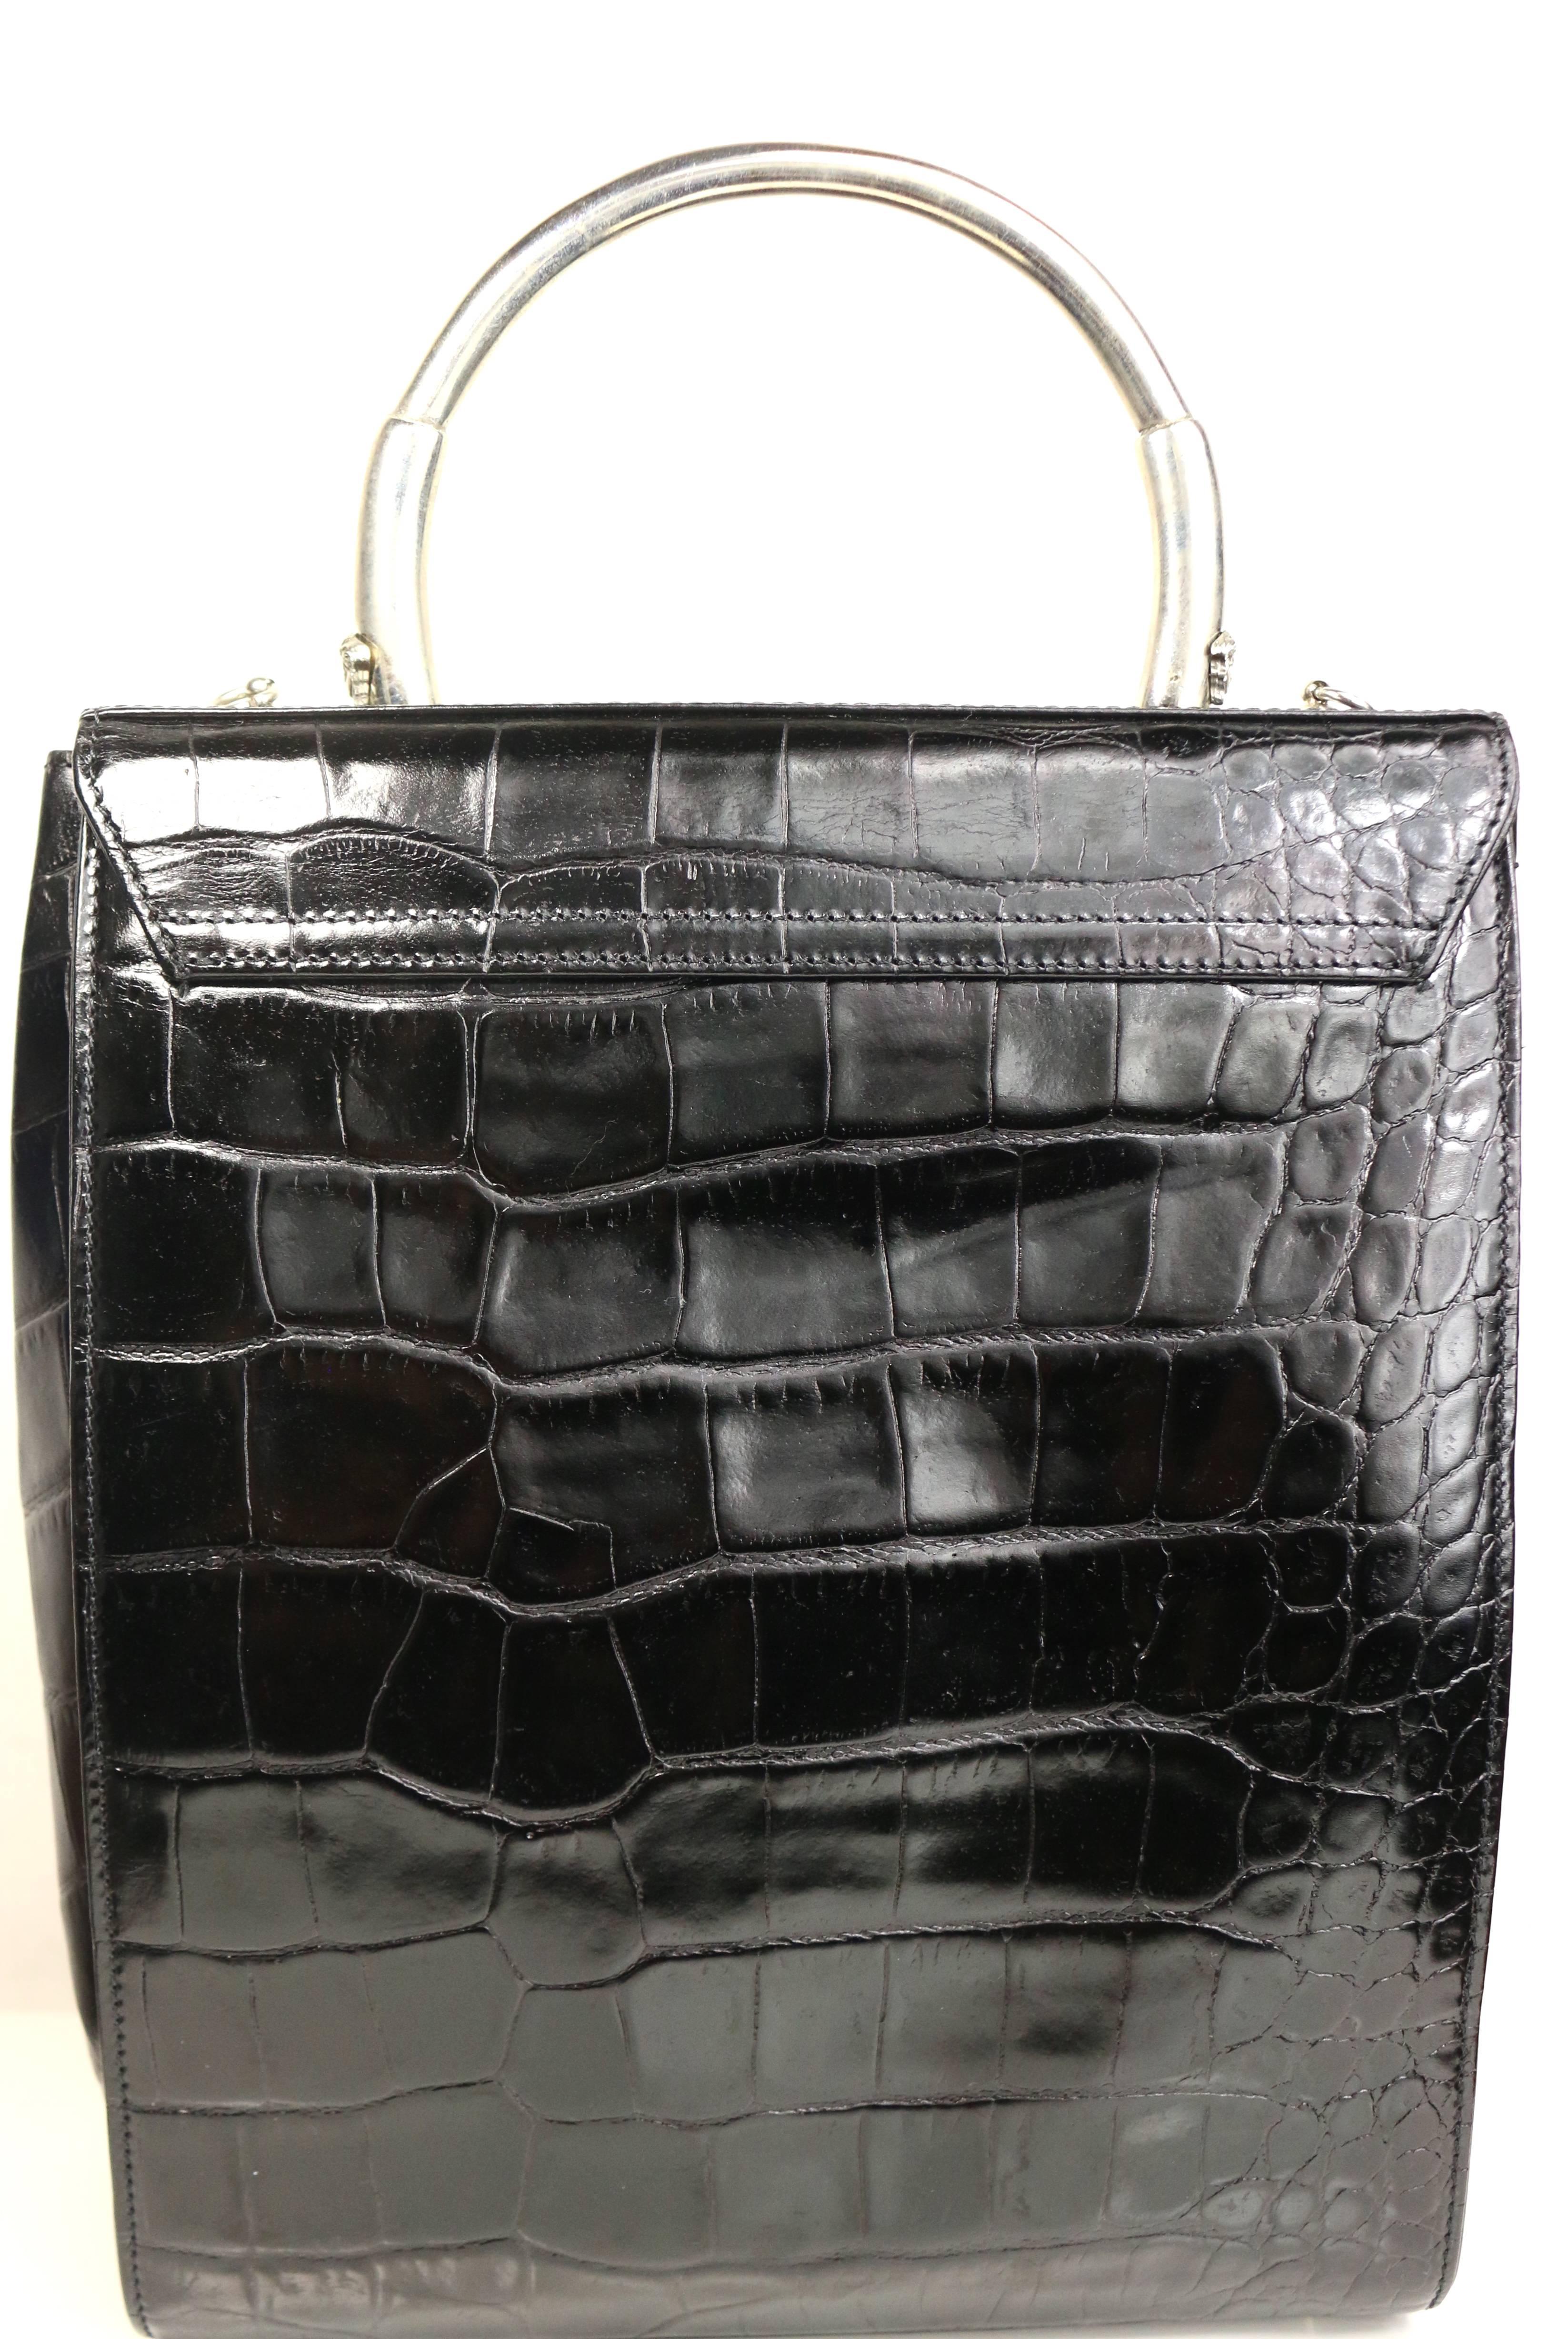 - Vintage 90s Gianni Versace black embossed croc leather flap shoulder bag. 

- Medusa logo flap with snap button closure. 

- Silver toned hardware 